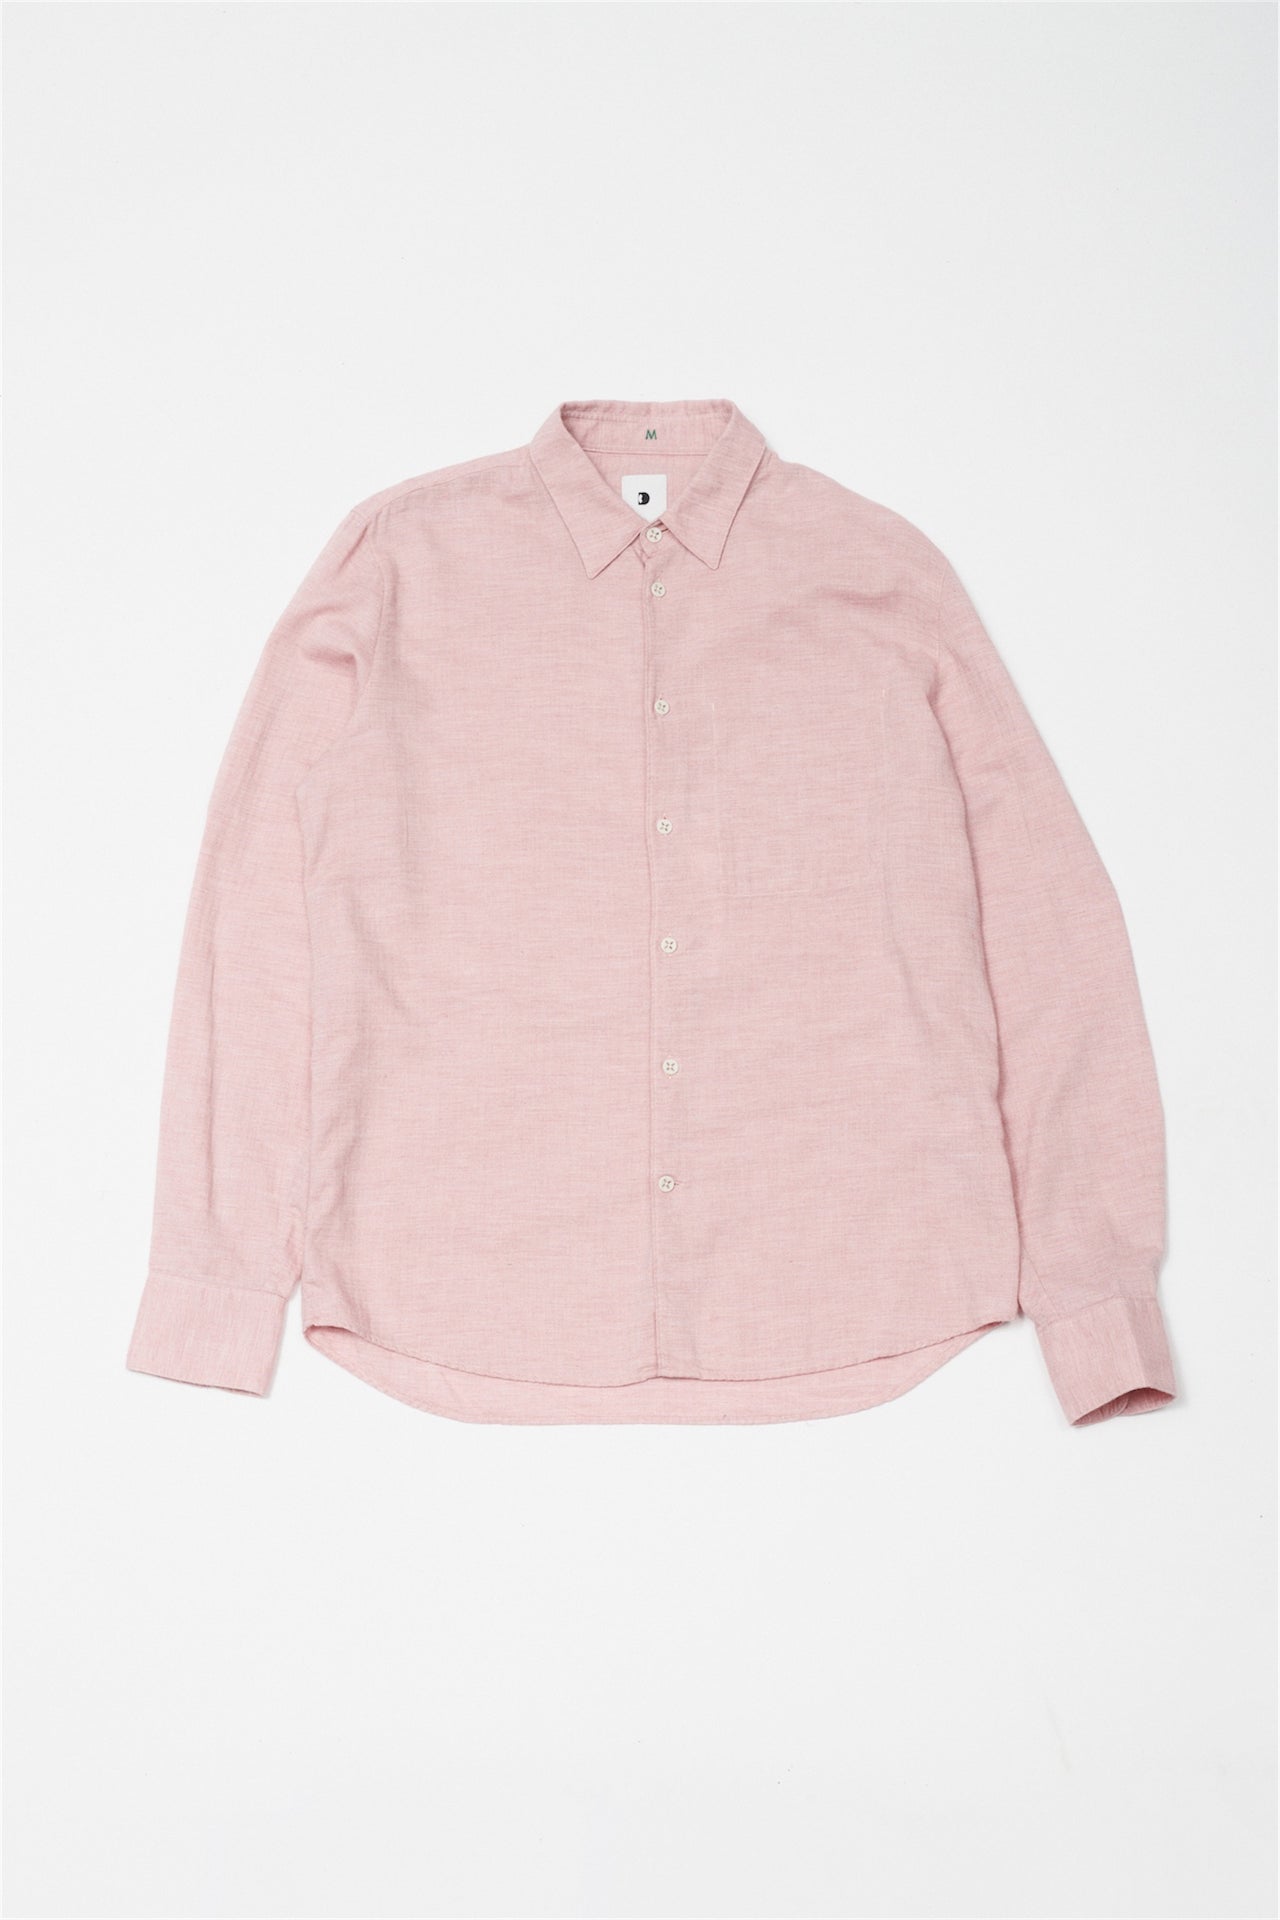 Feel Good Shirt in a Pink Japanese Organic Herringbone Cotton